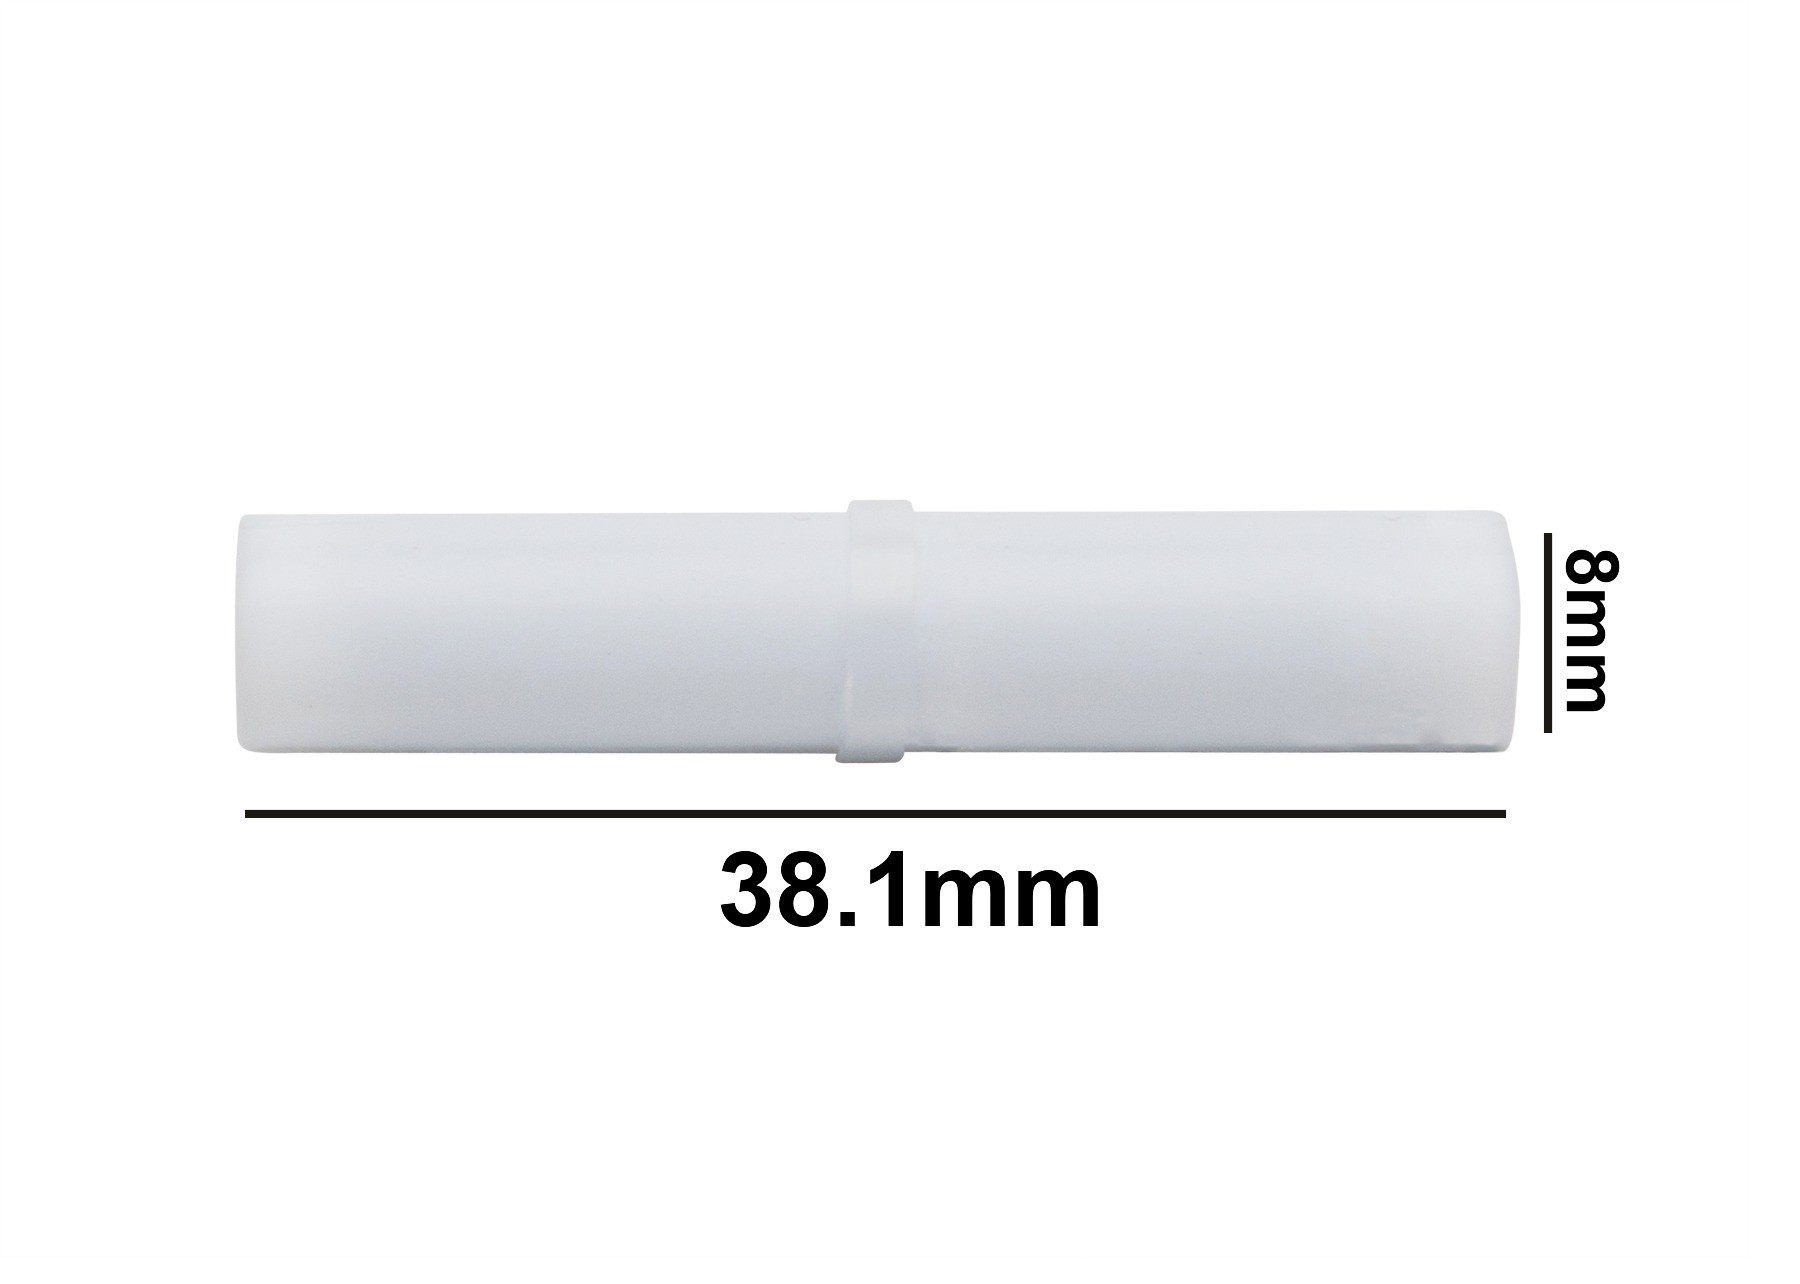 SP Bel-Art Spinbar Teflon Cylindrical Magnetic Stirring Bar; 38.1 x 8mm, White